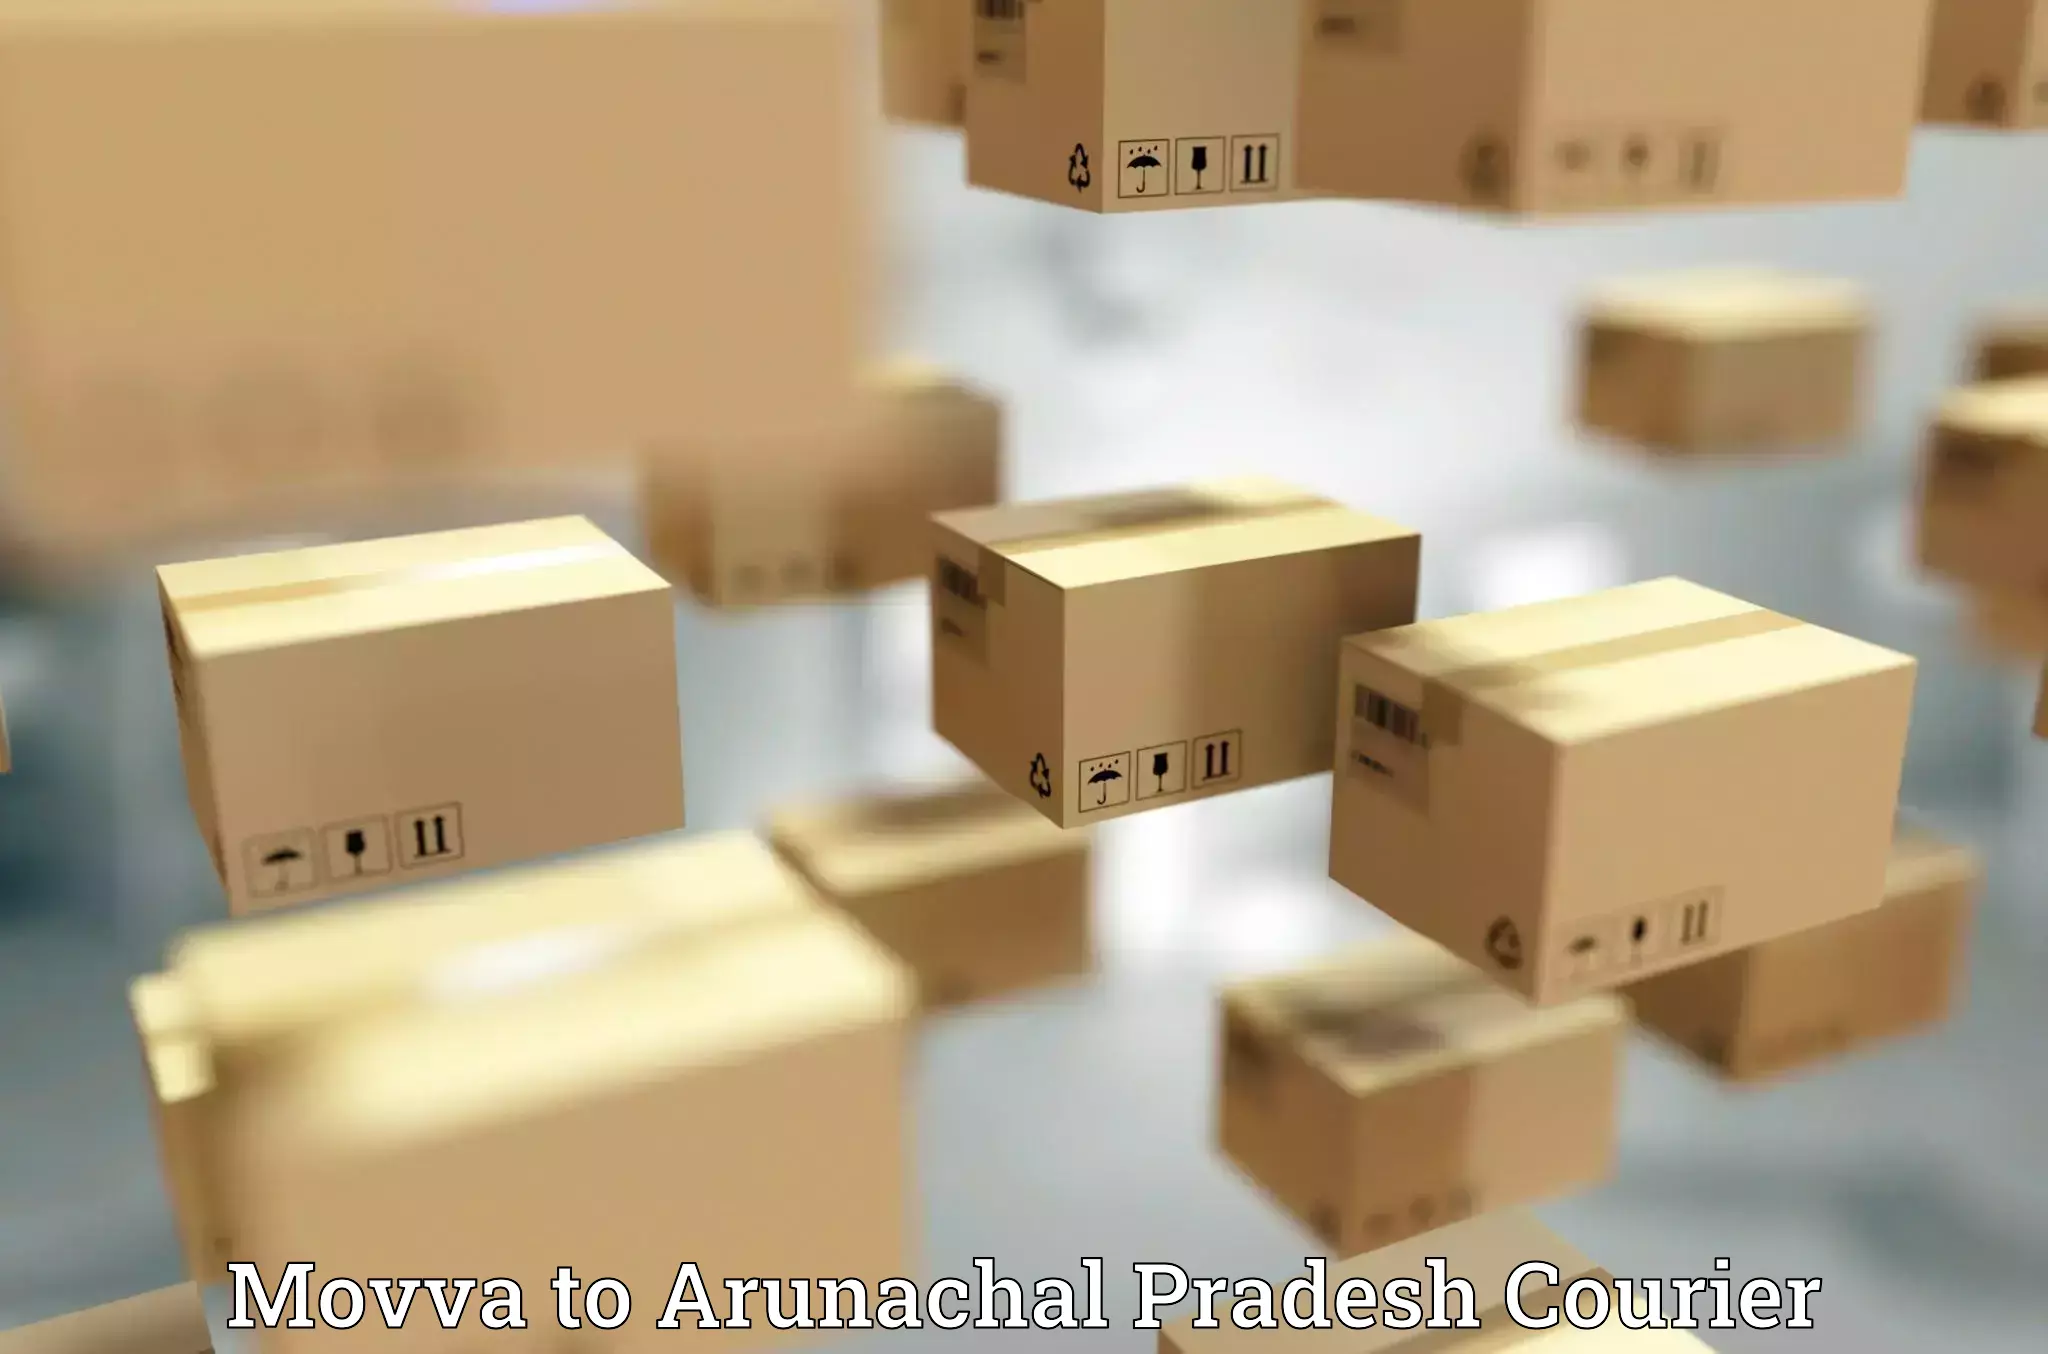 Courier service innovation Movva to Arunachal Pradesh